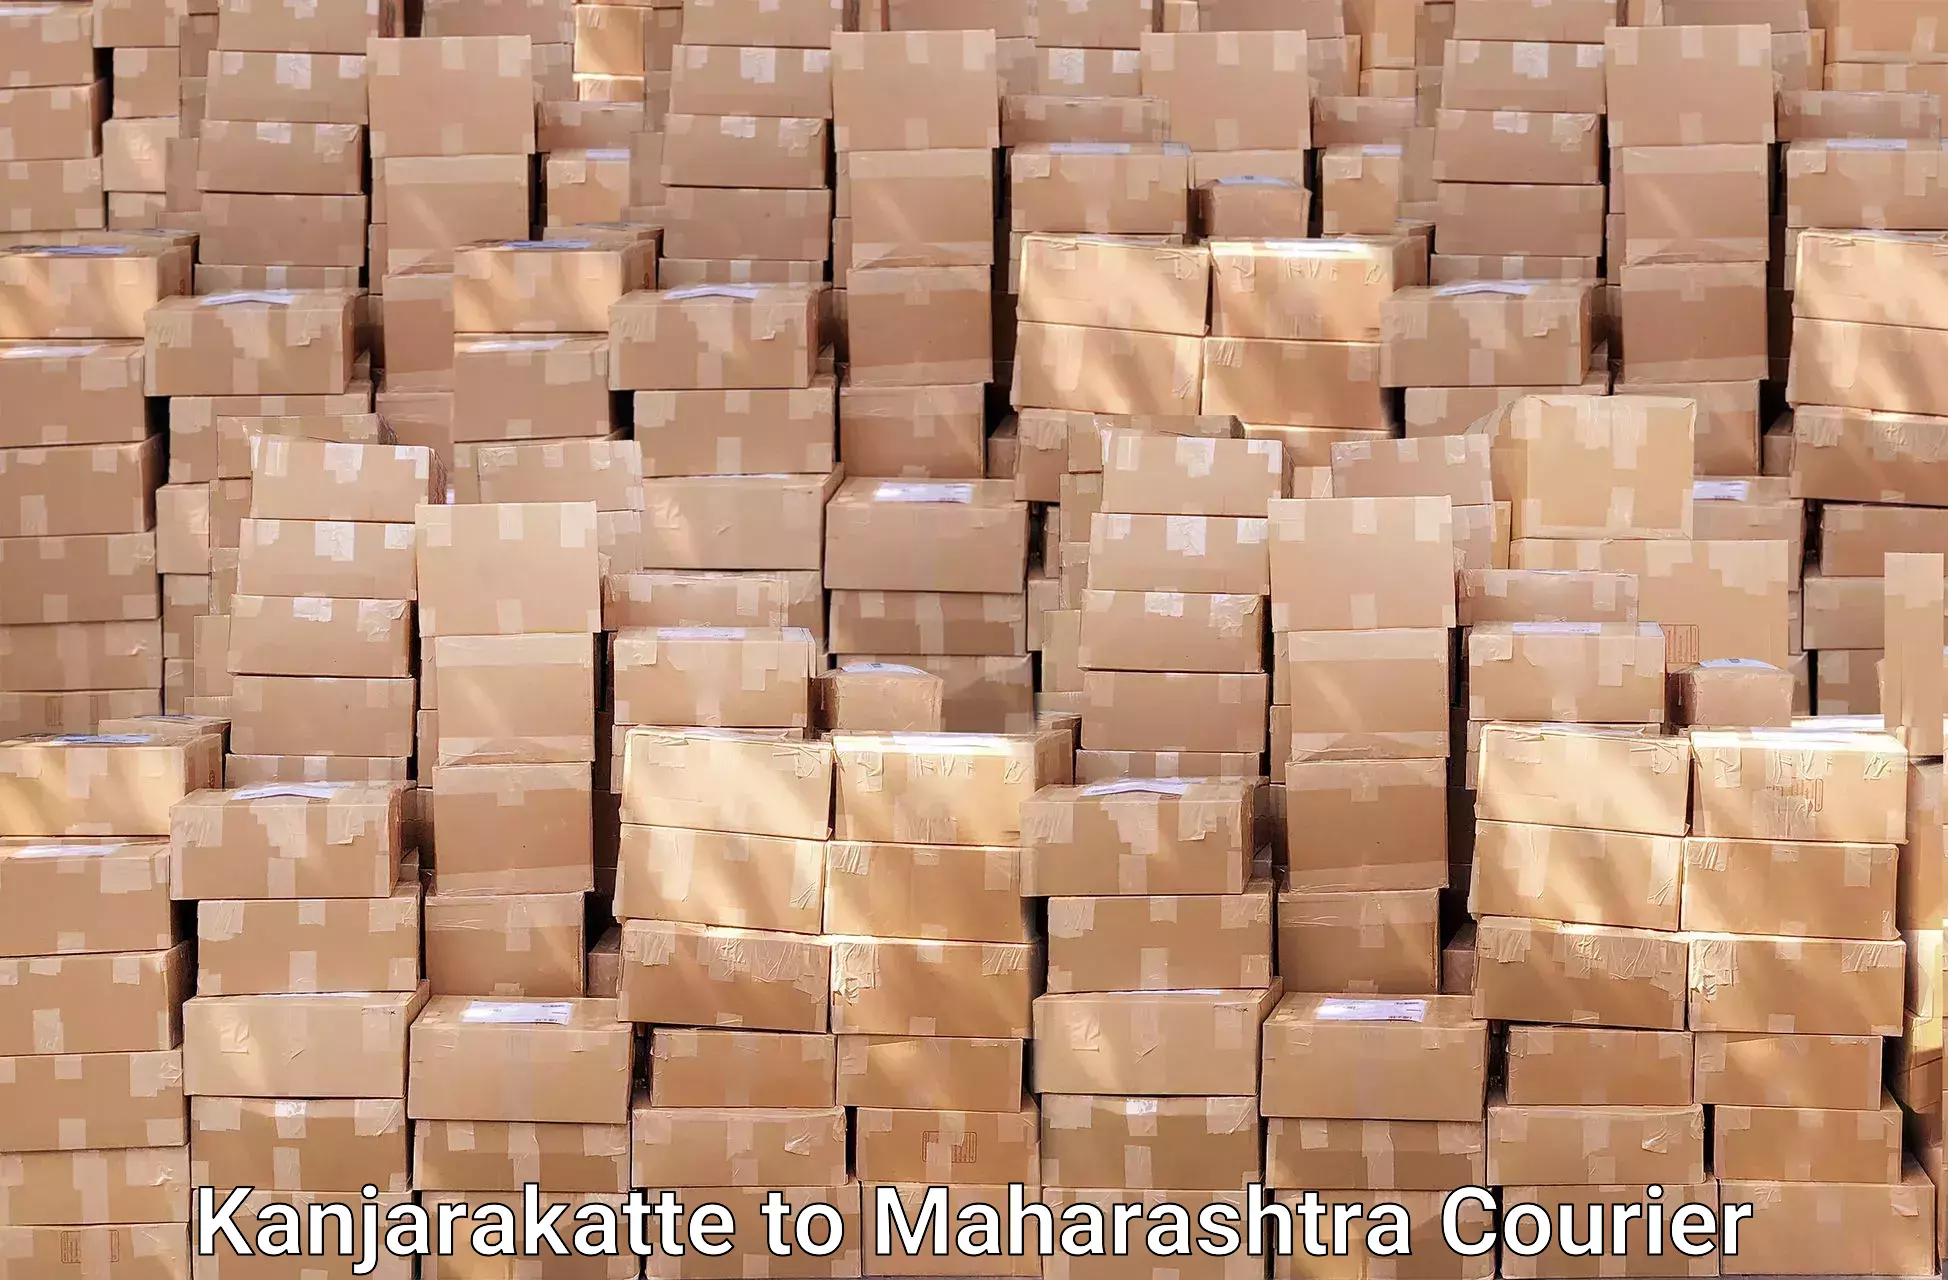 Trusted moving company Kanjarakatte to Maharashtra